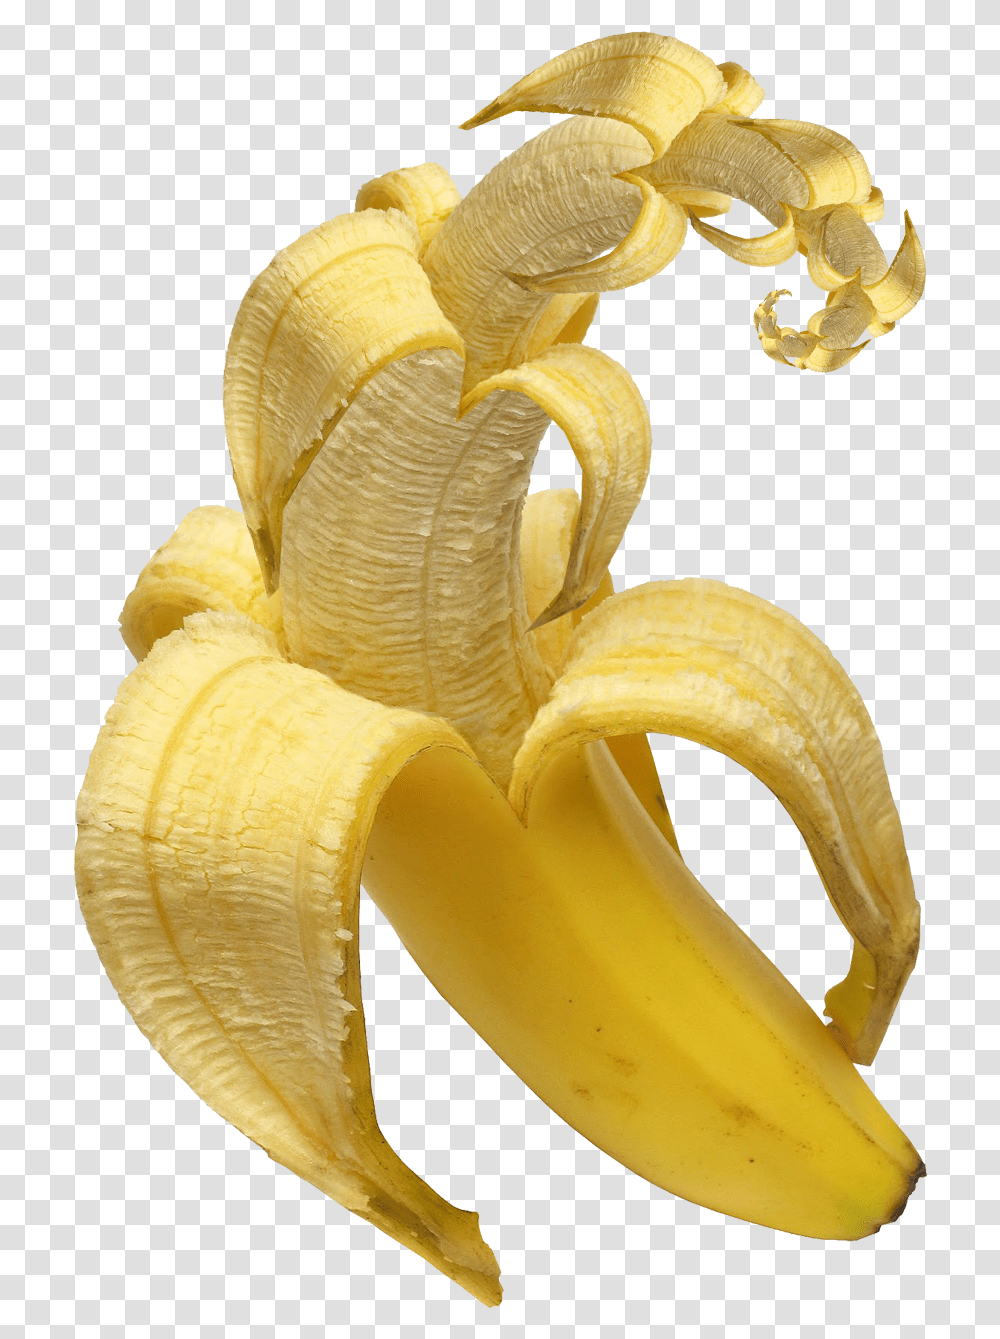 Banana Banana Family Fruit Food Produce Inside Of A Banana, Plant, Peel, Sweets, Confectionery Transparent Png